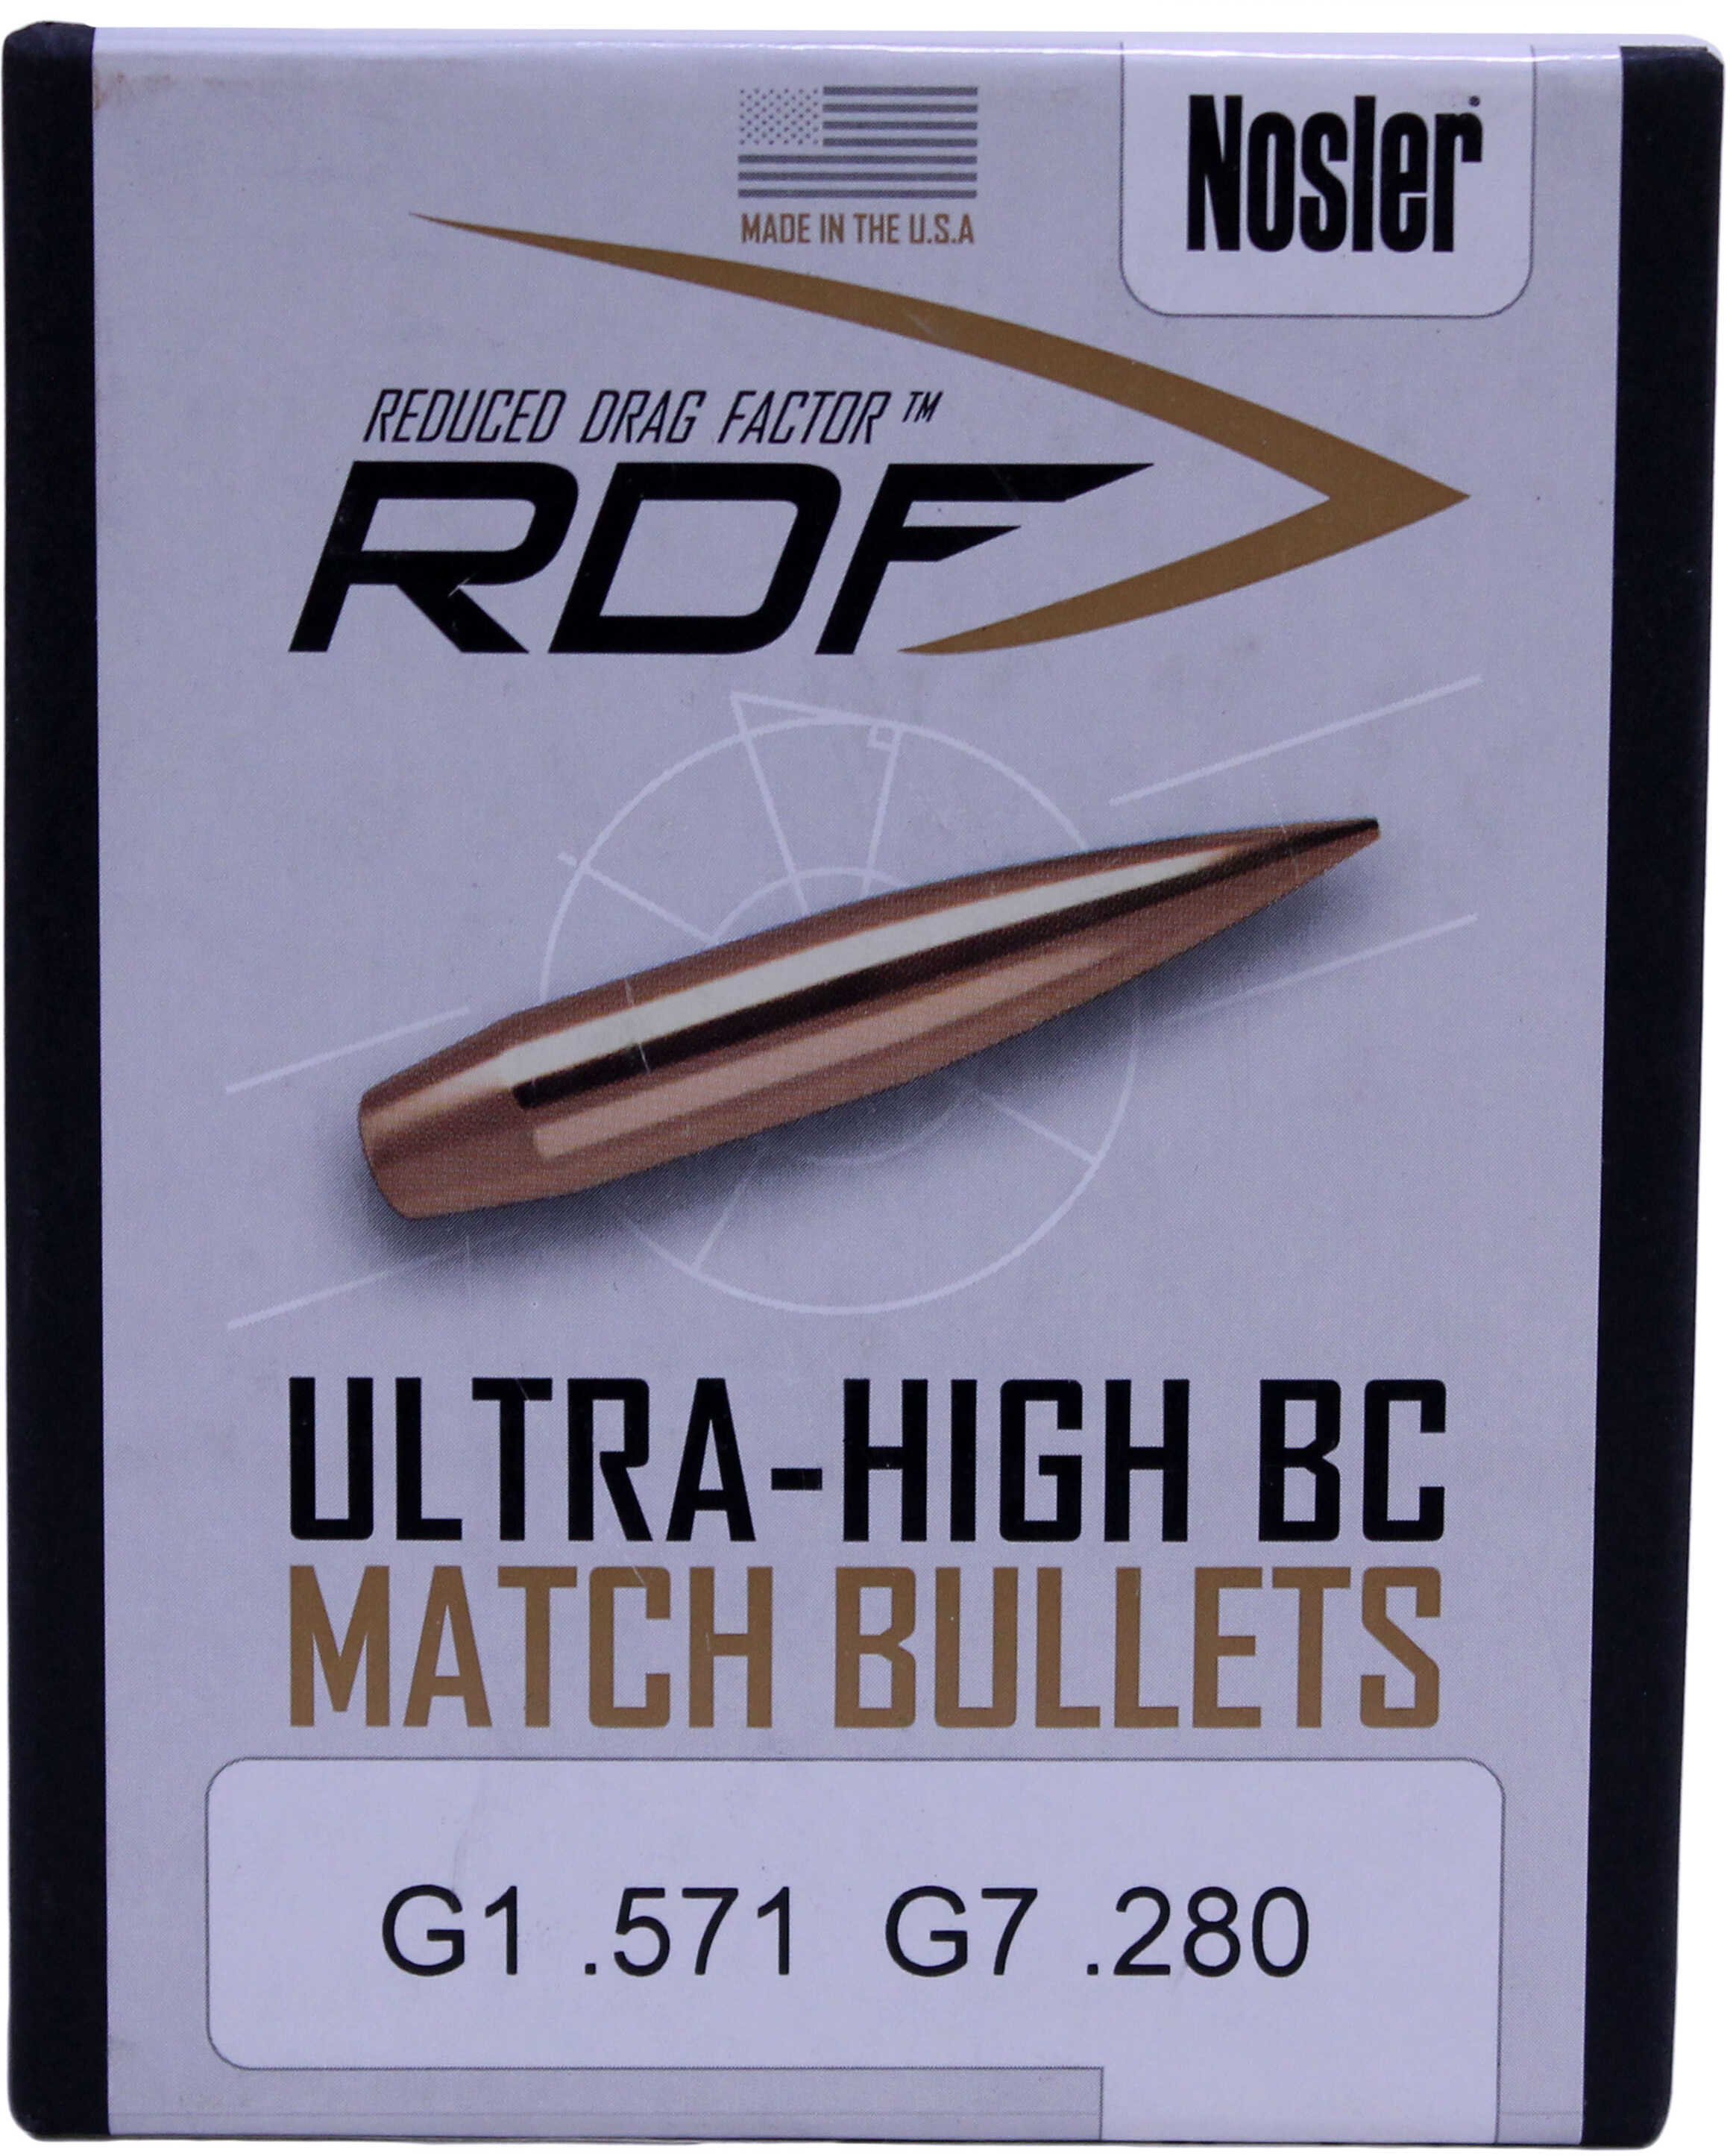 Nosler 6mm .243 Diameter 105 Grain Boat Tail HP RDF Match 100 Count